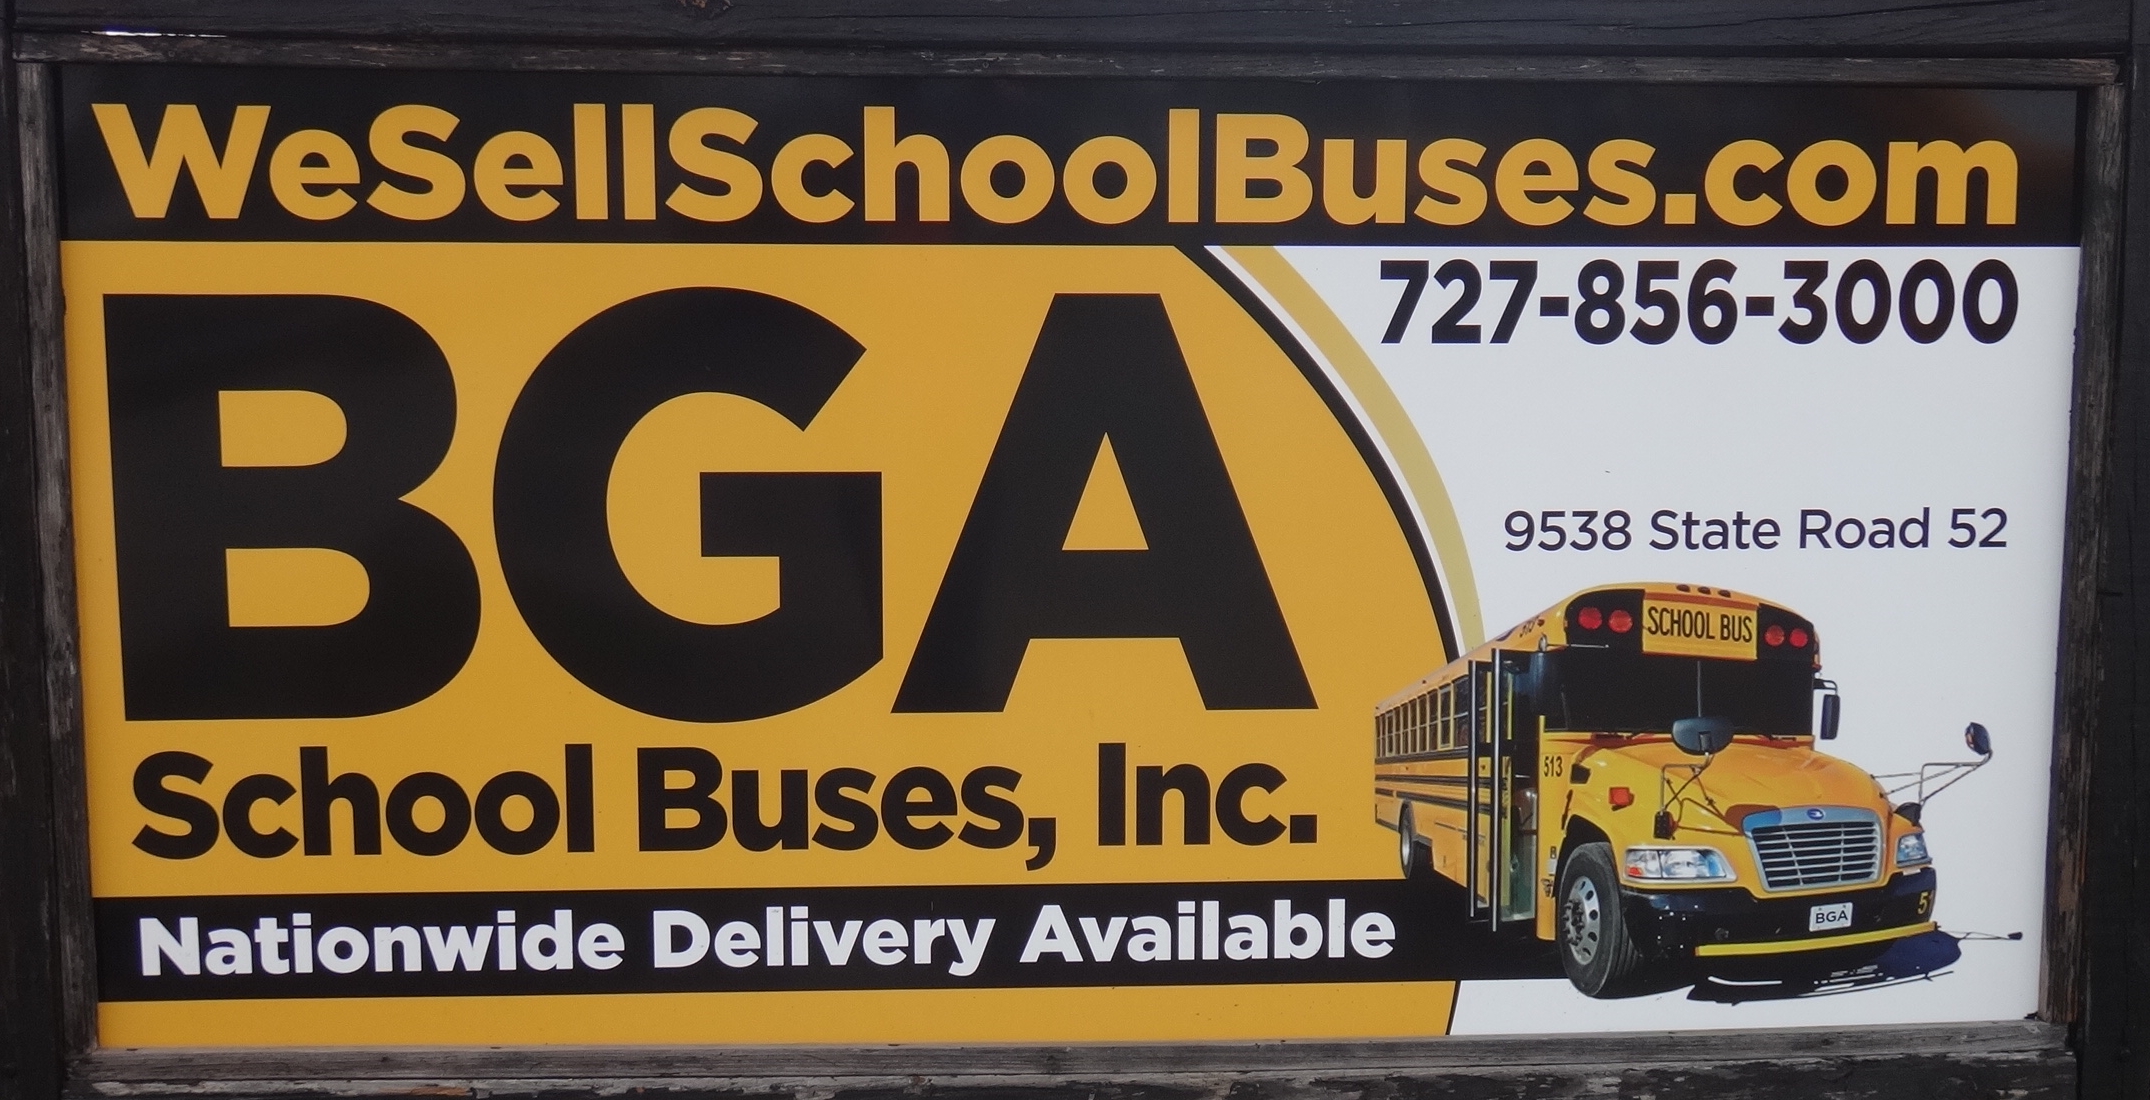 BGA School Buses, Inc. Hudson, FL 34669